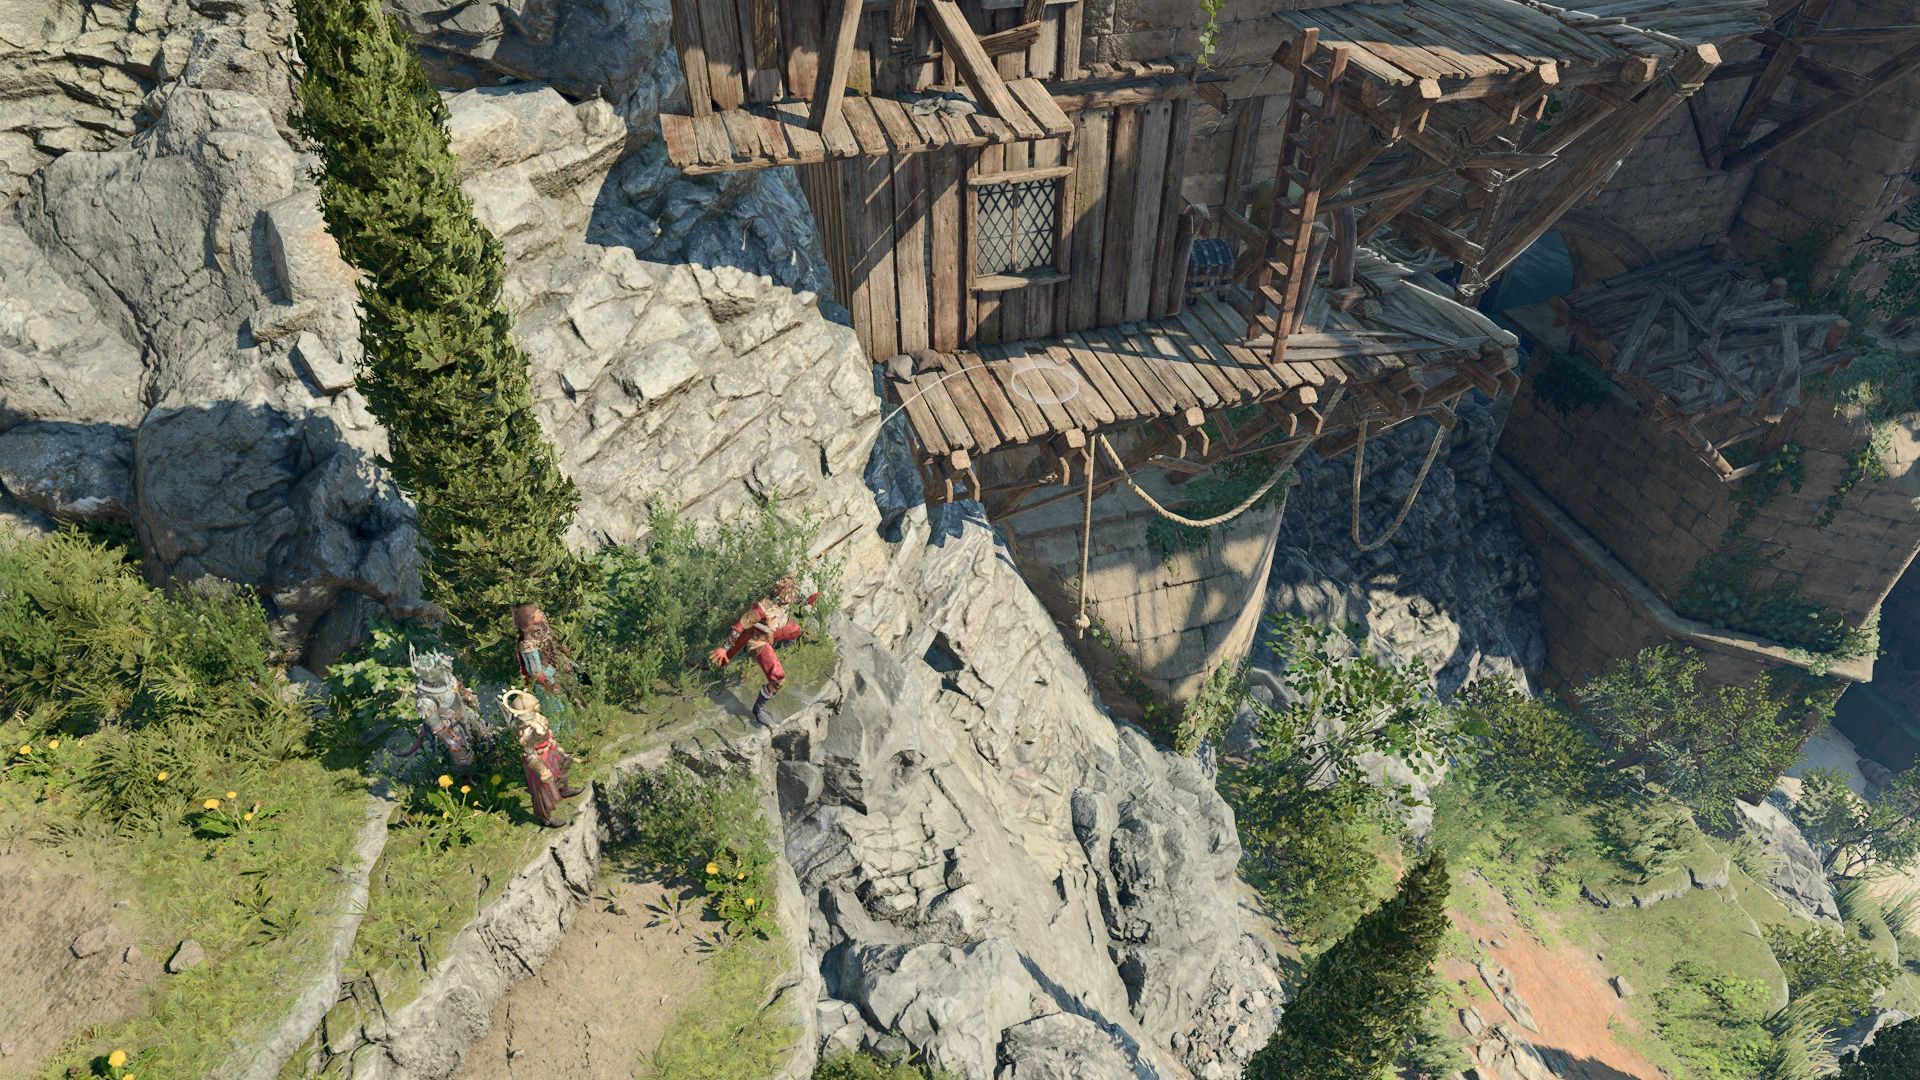 An image showing a side-entrance for a questline in Baldur's Gate 3.